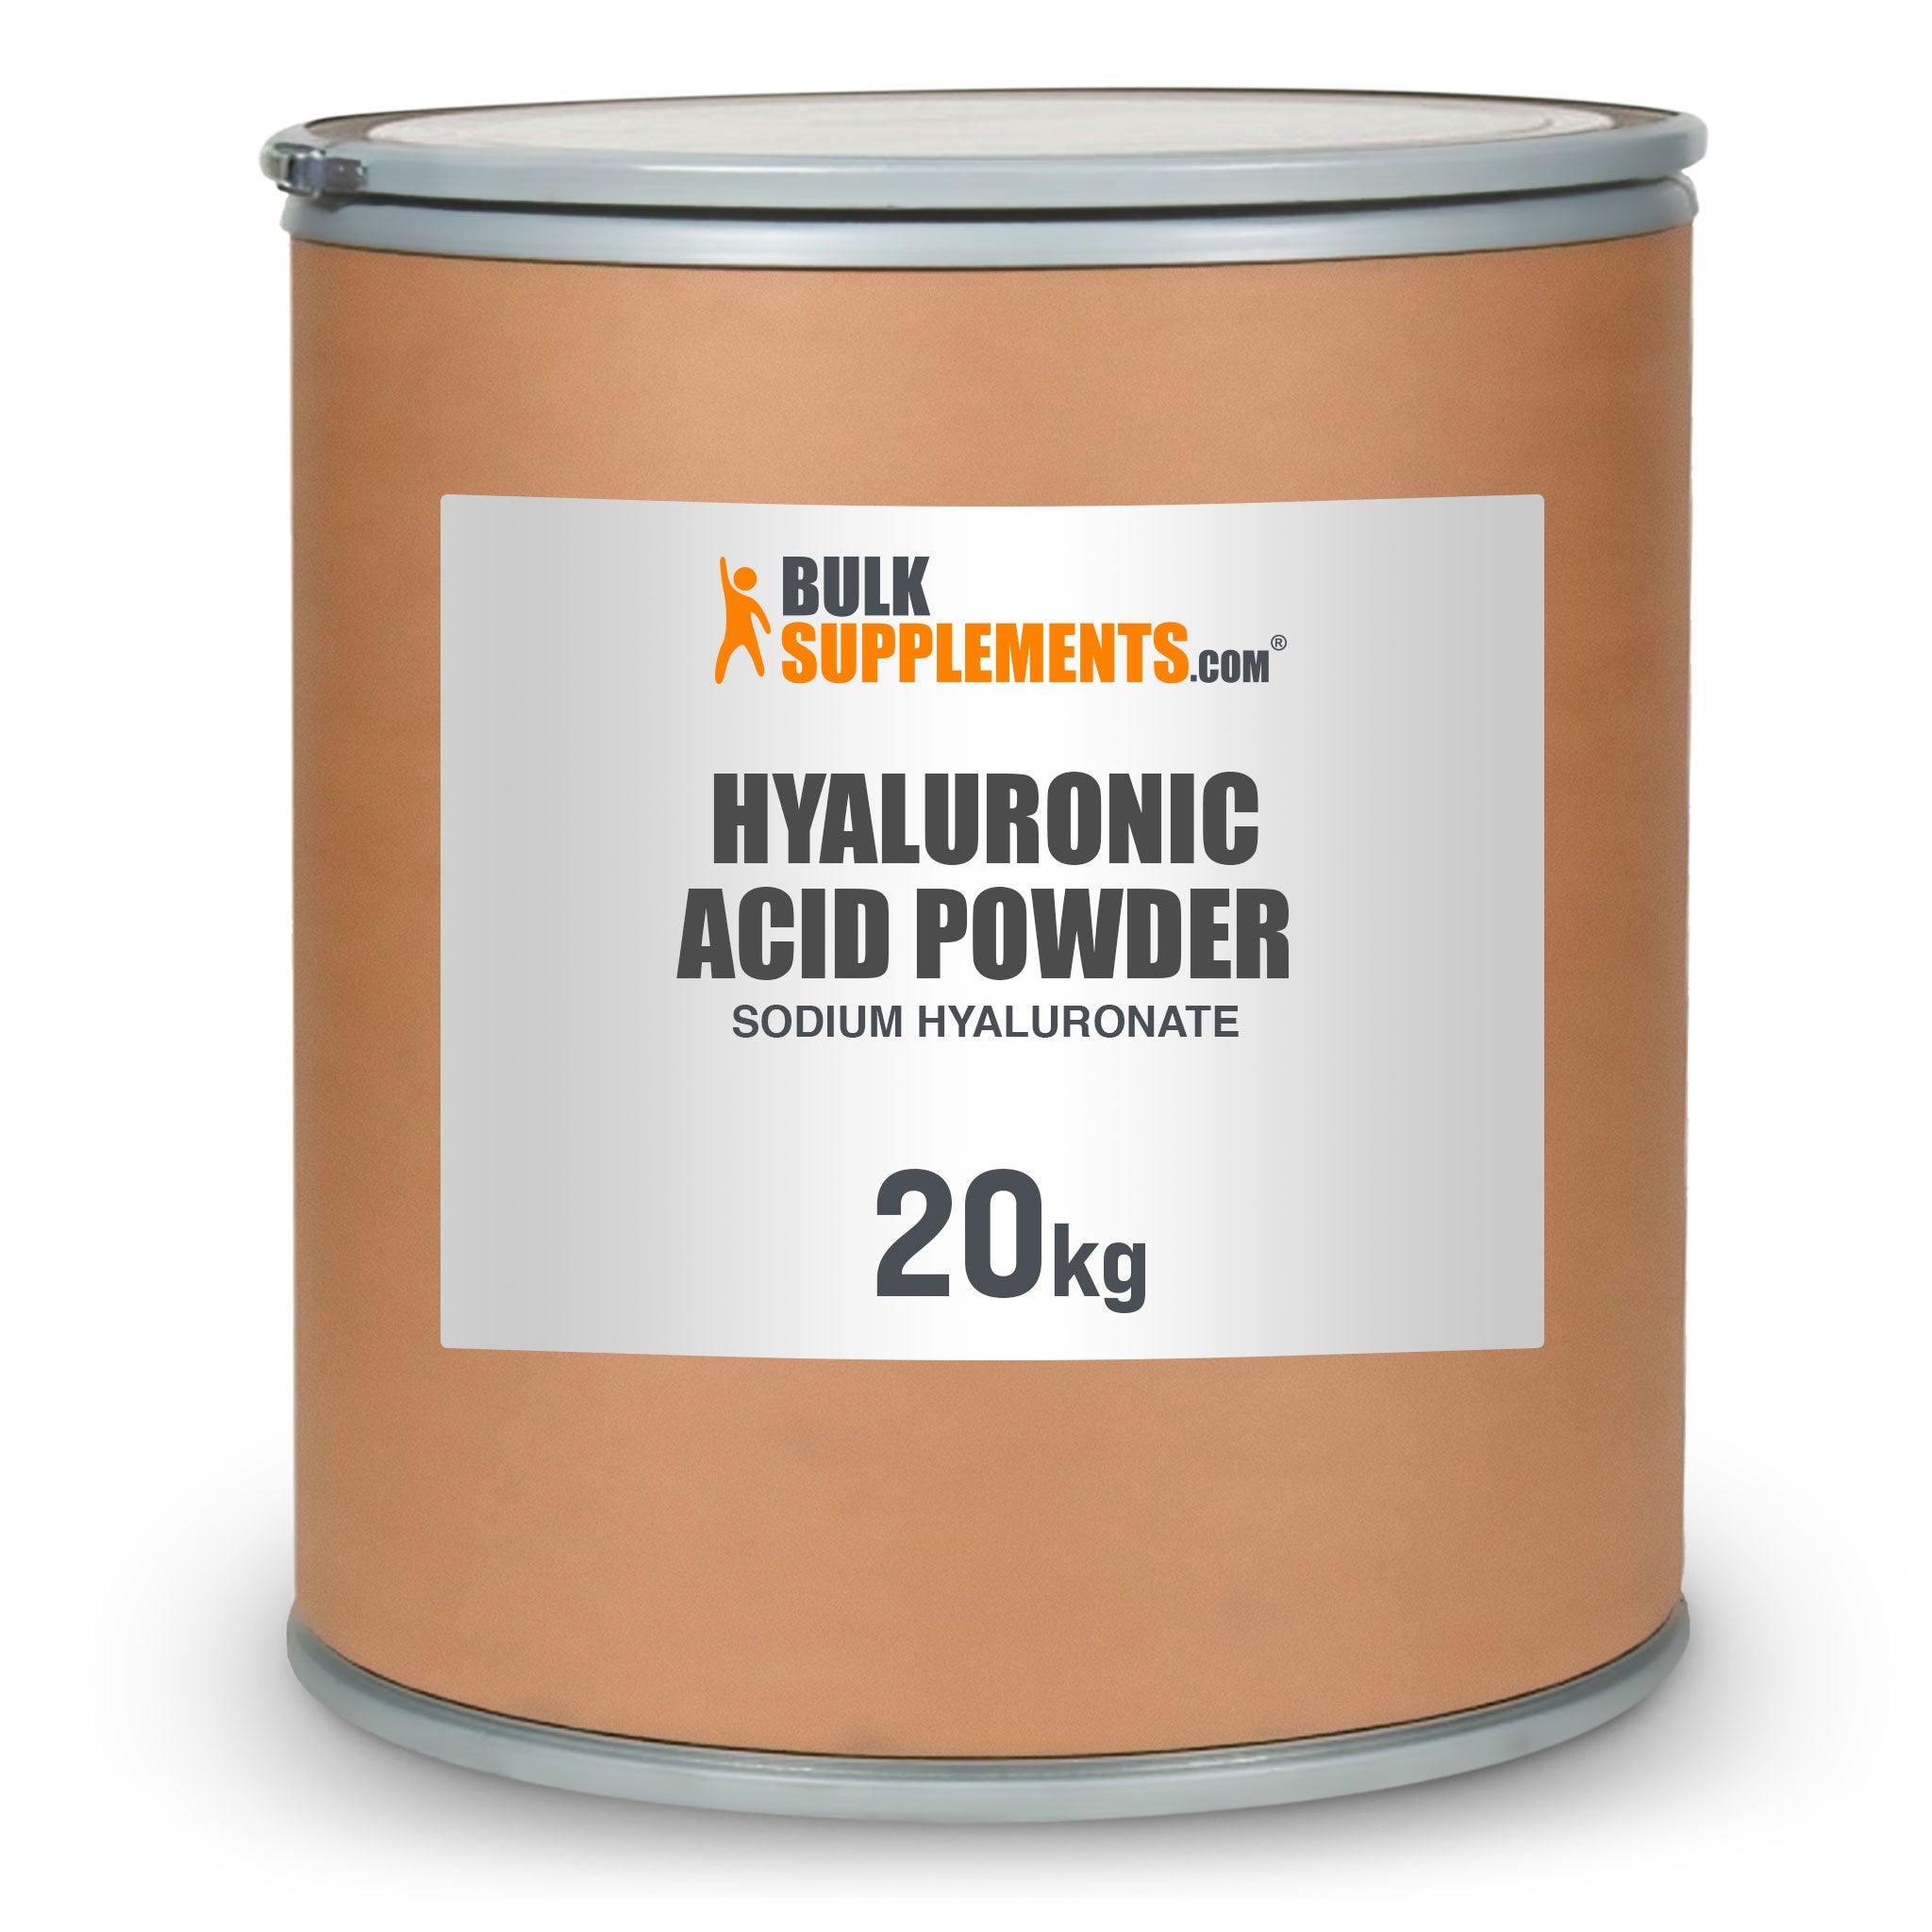 BulkSupplements Hyaluronic Acid Powder Sodium Hyaluronate 20kg drum